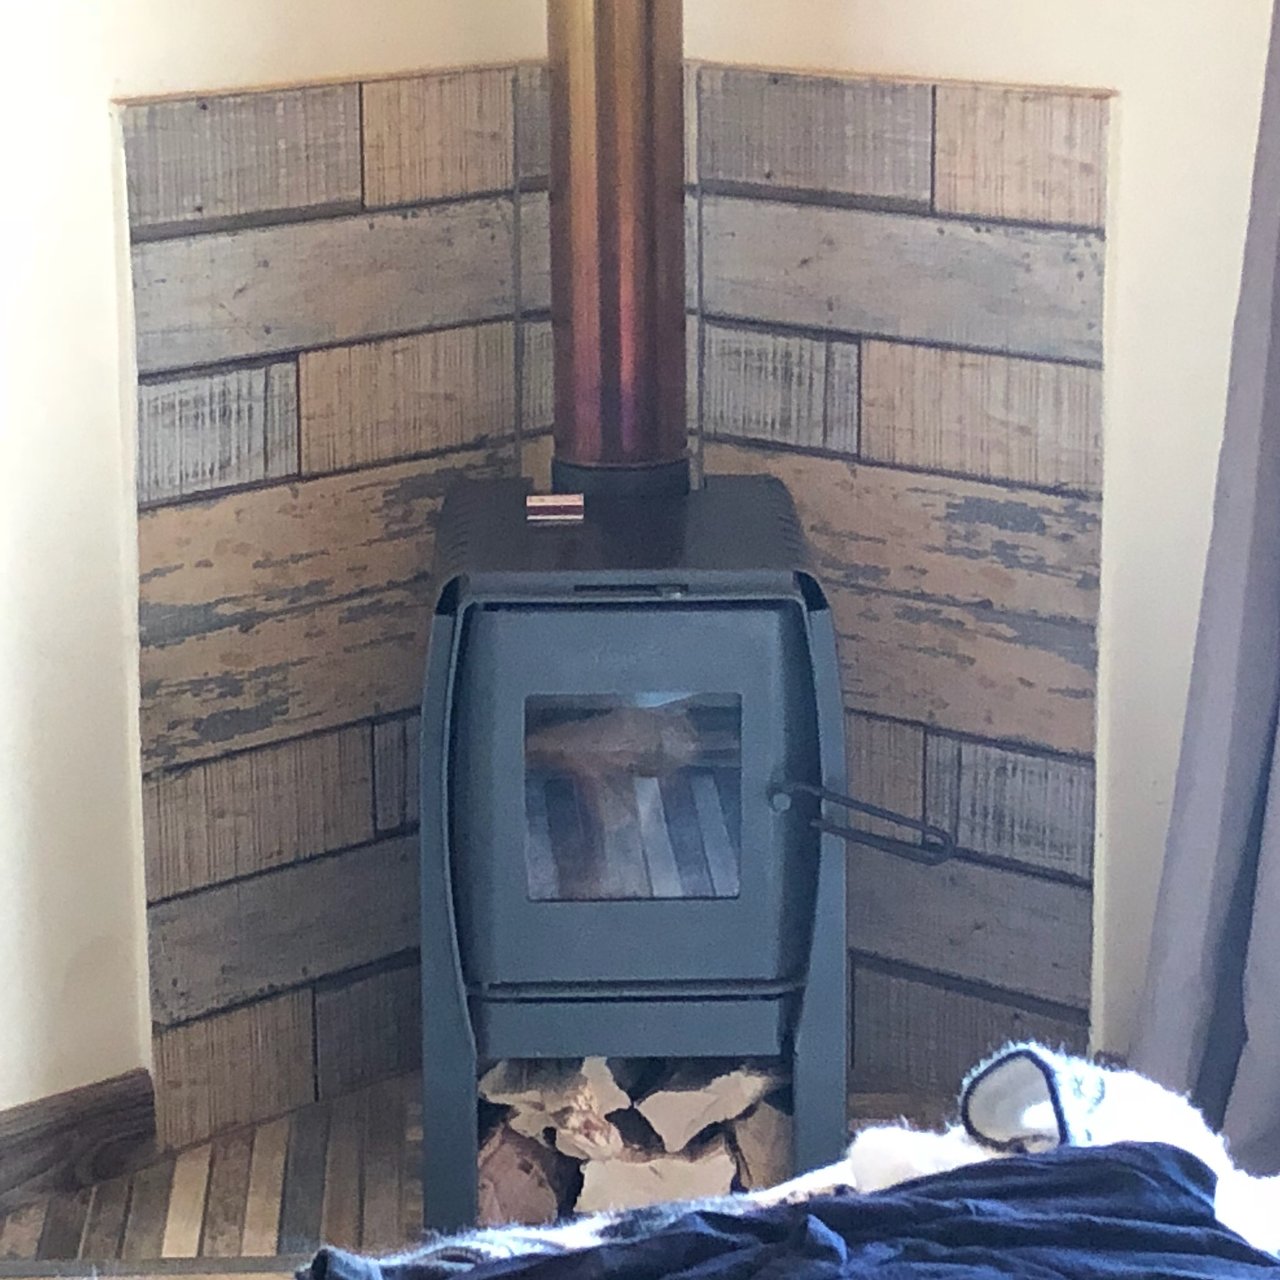 Fireplace Pan Inspirational Hard Road atacama Updated 2019 Prices Hostel Reviews and